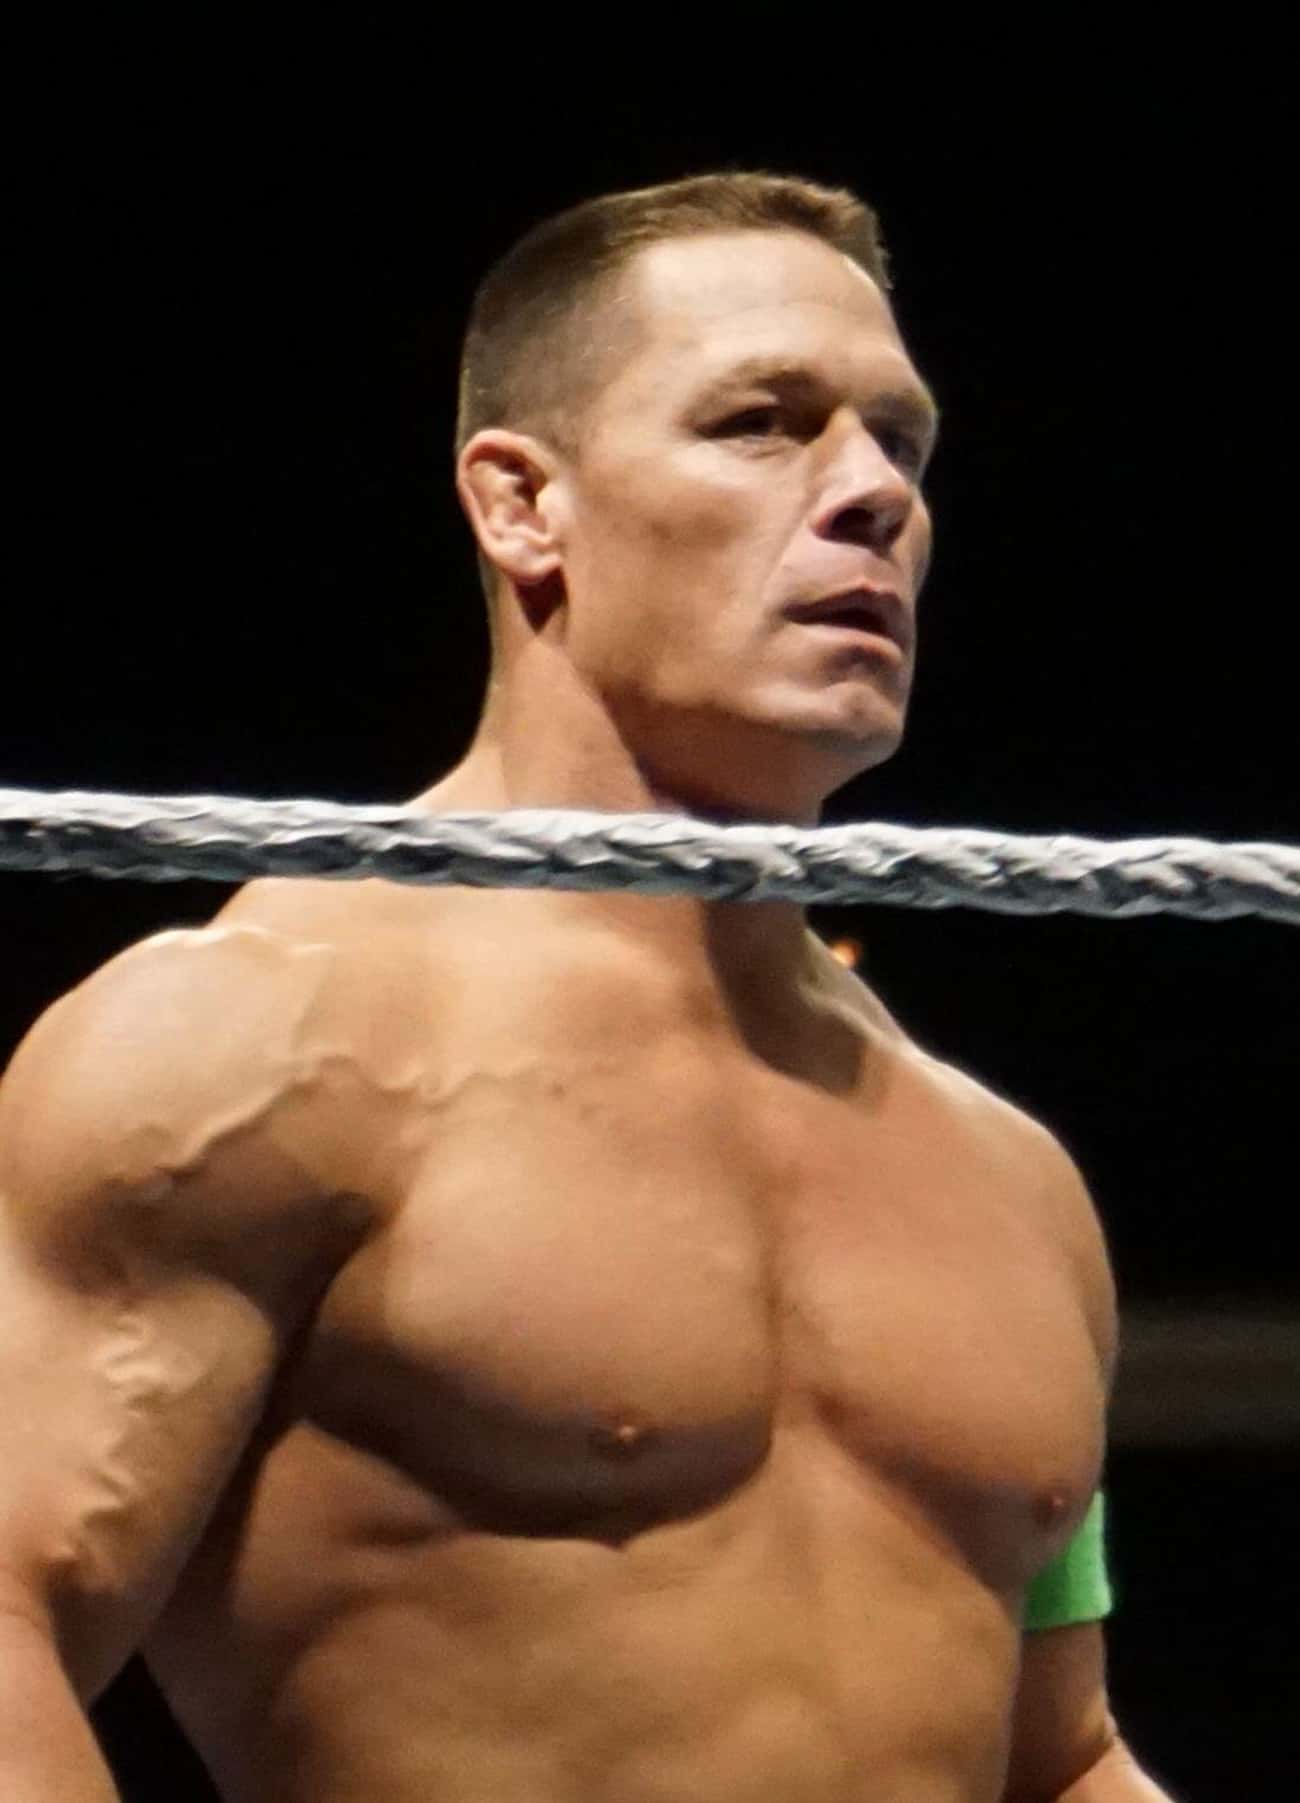 McMahon Used A Racial Slur In A Segment With John Cena